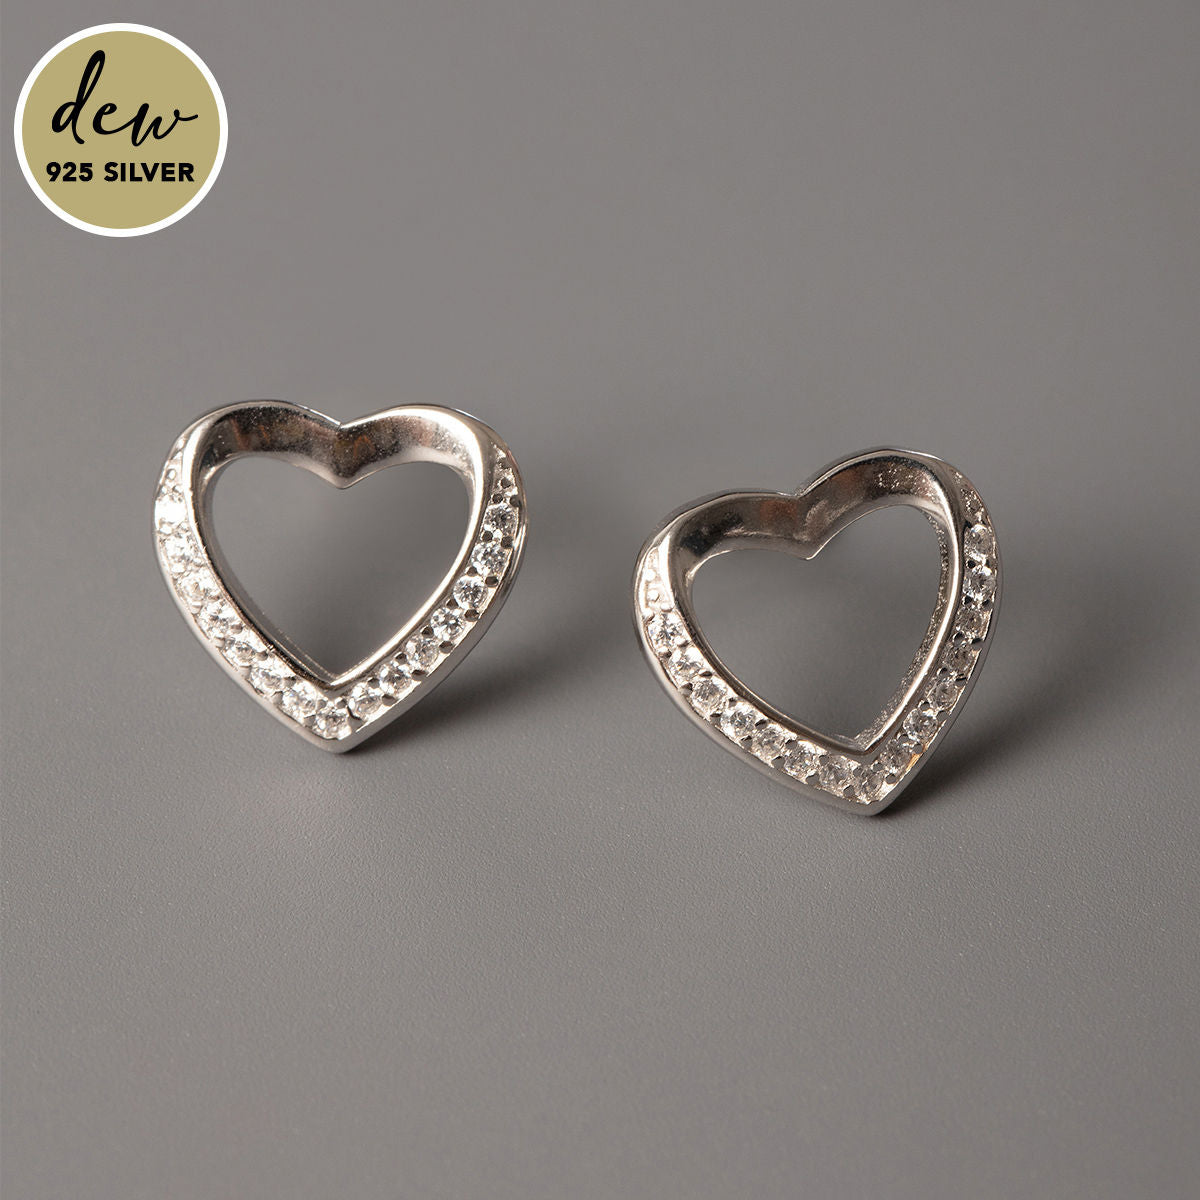 Stunning CZ Stone Silver Heart Jewellery Set